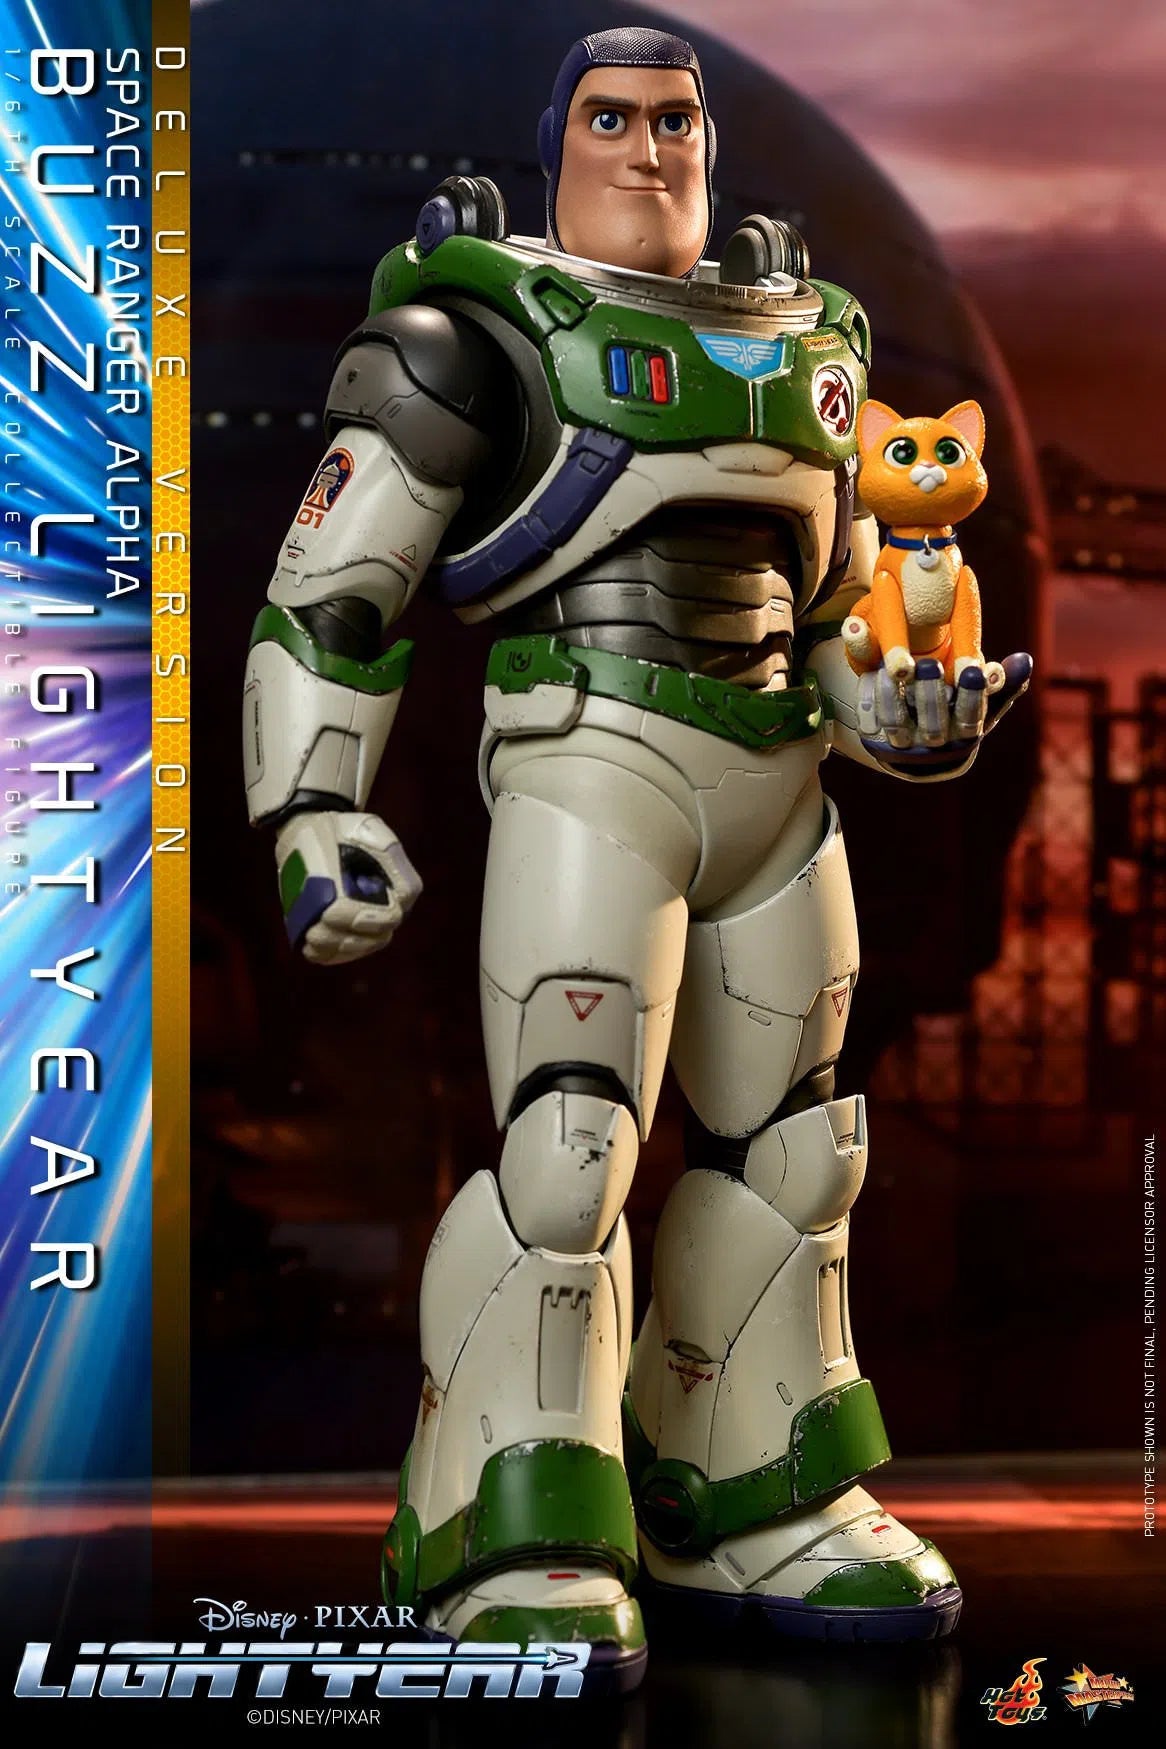 Buzz Lightyear: Space Ranger Alpha: Deluxe: Disney: MMS635: Hot Toys